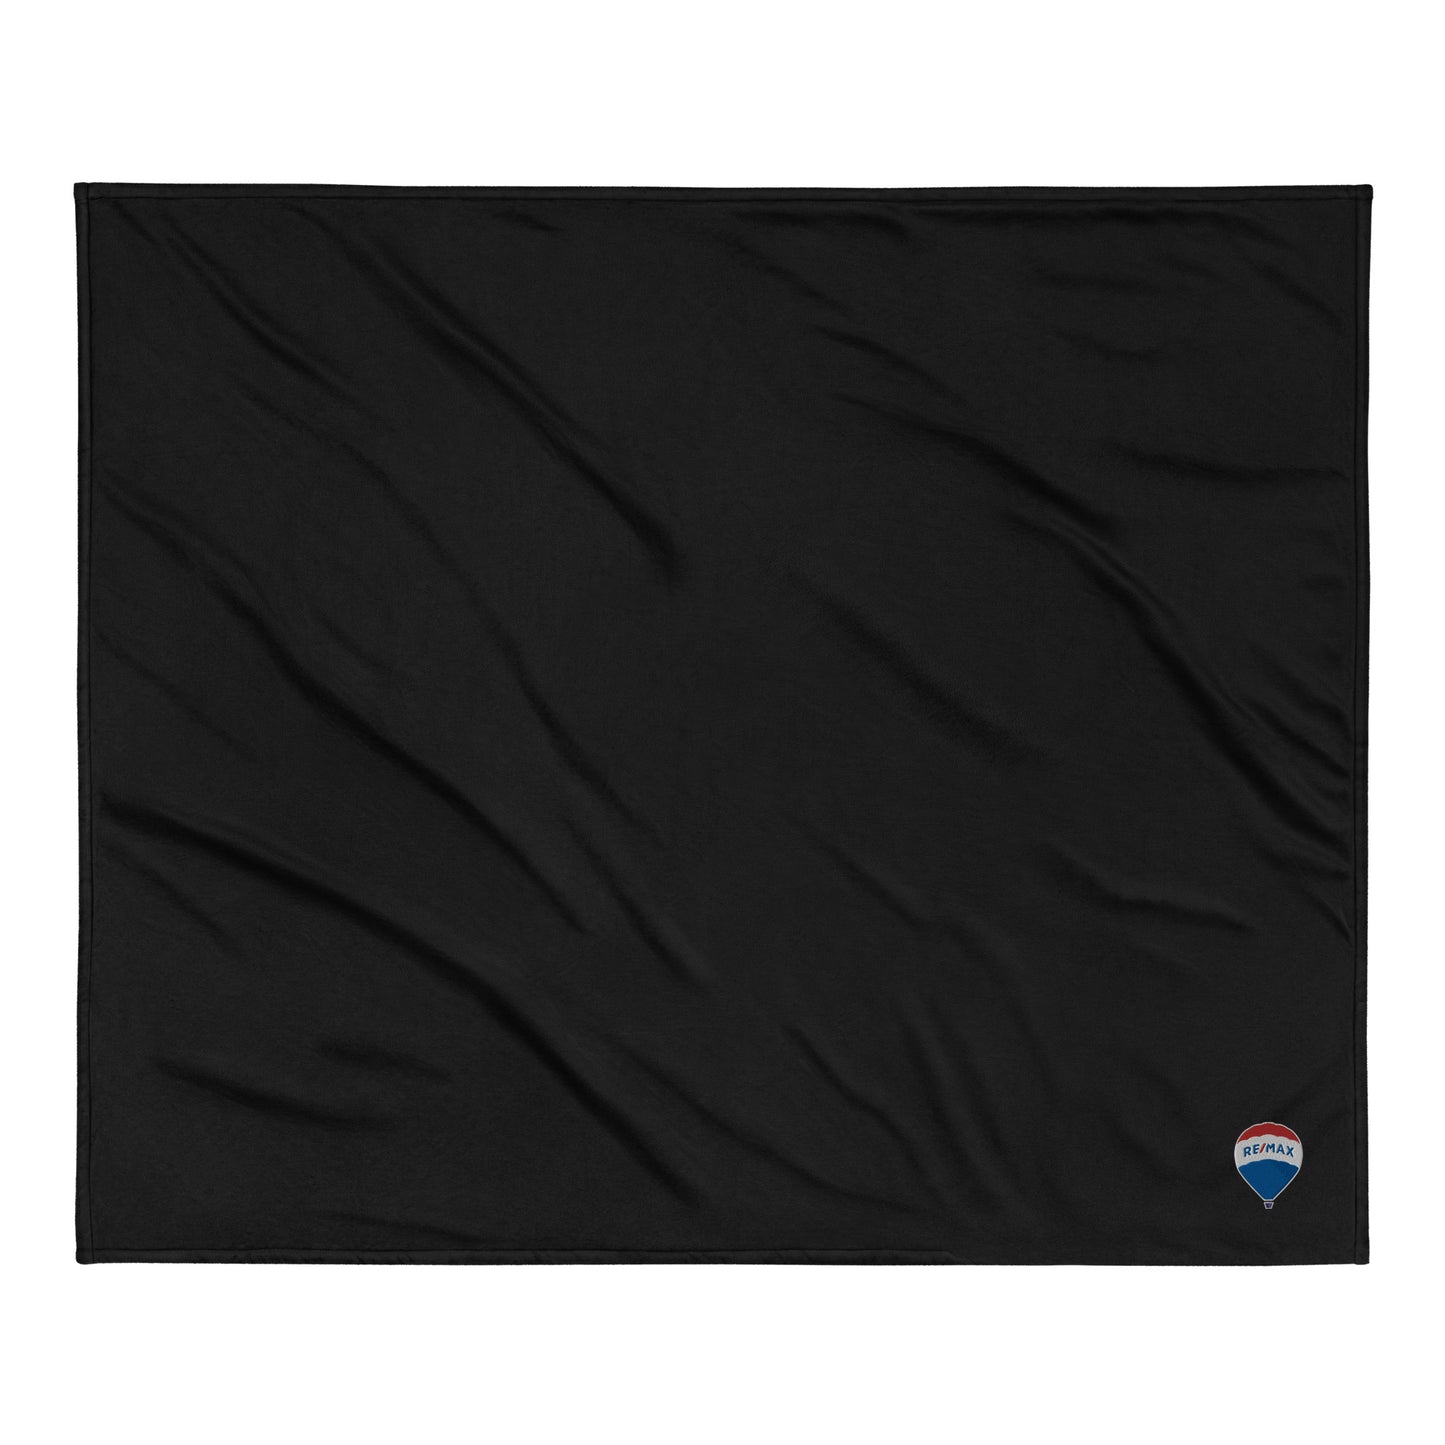 RE/MAX Premium sherpa blanket